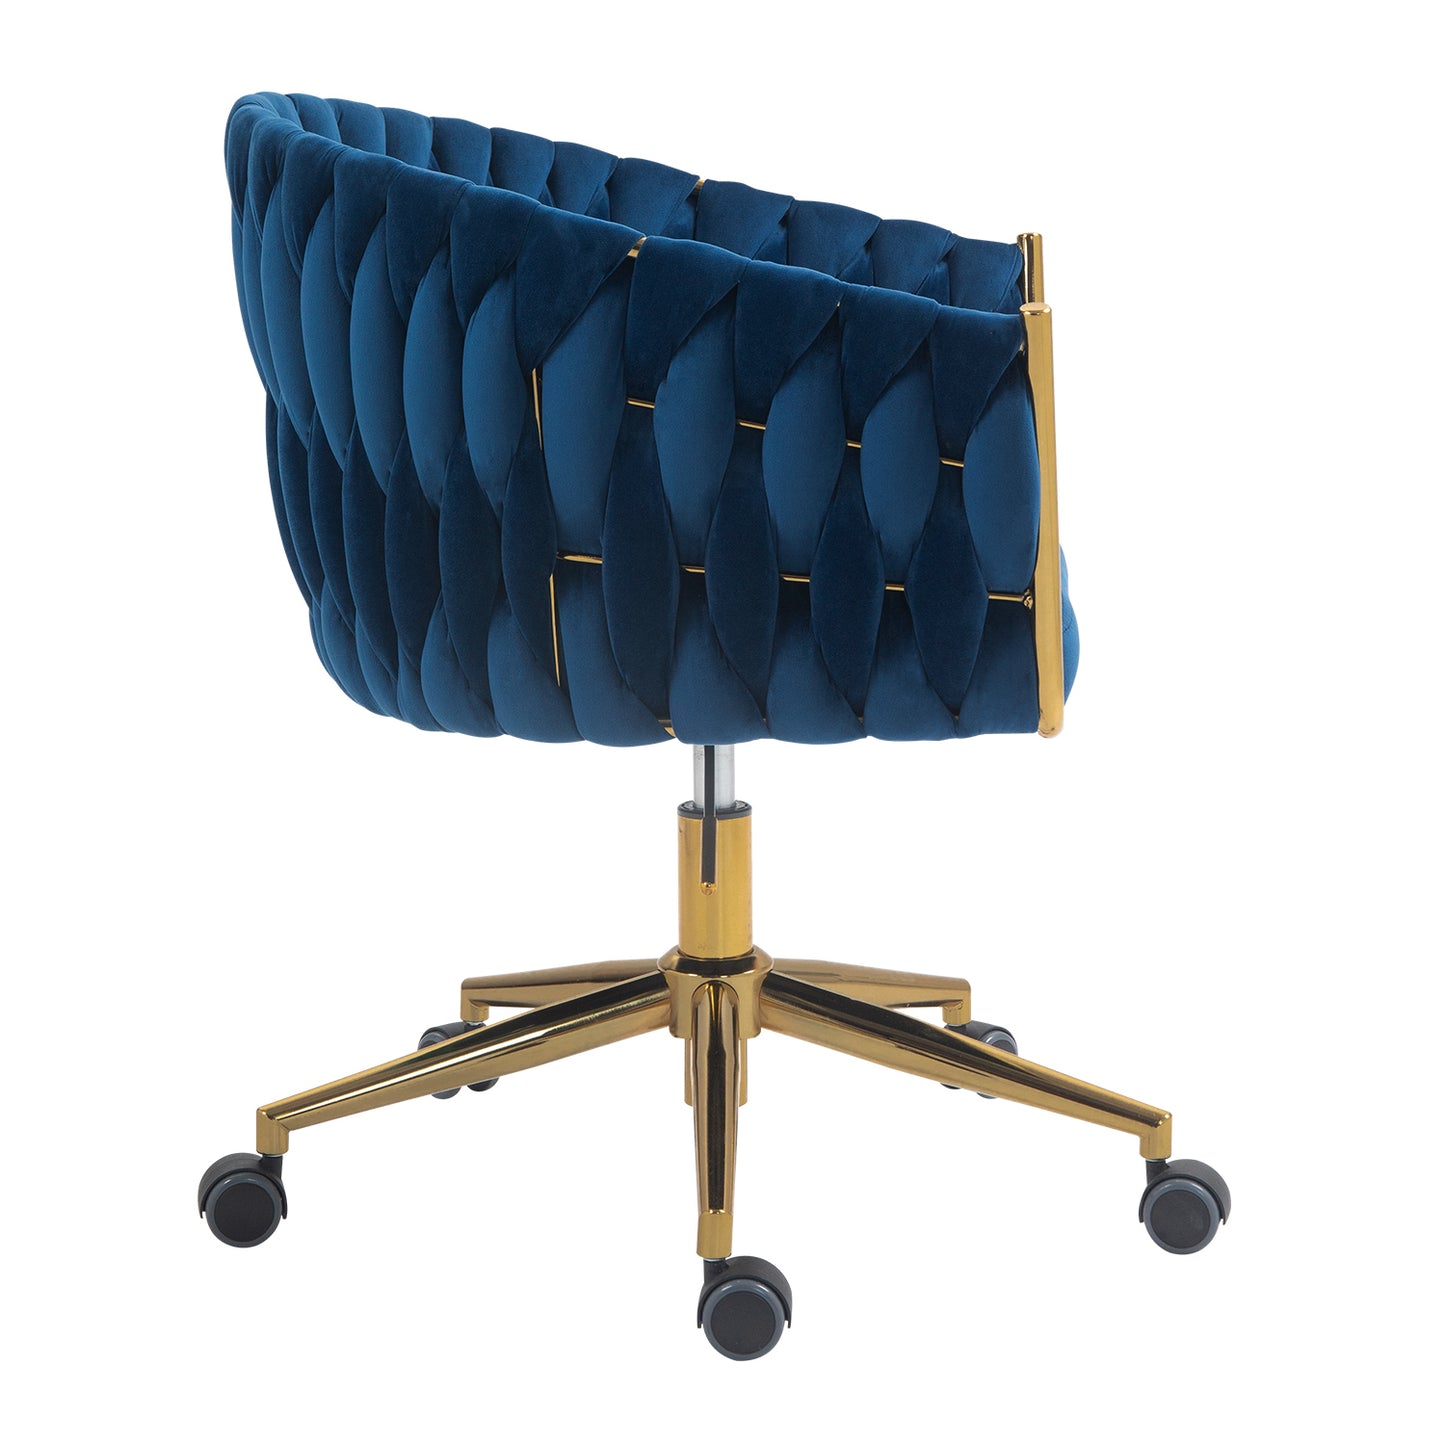 Moderna Hand-woven Office chair in Blue Fabric